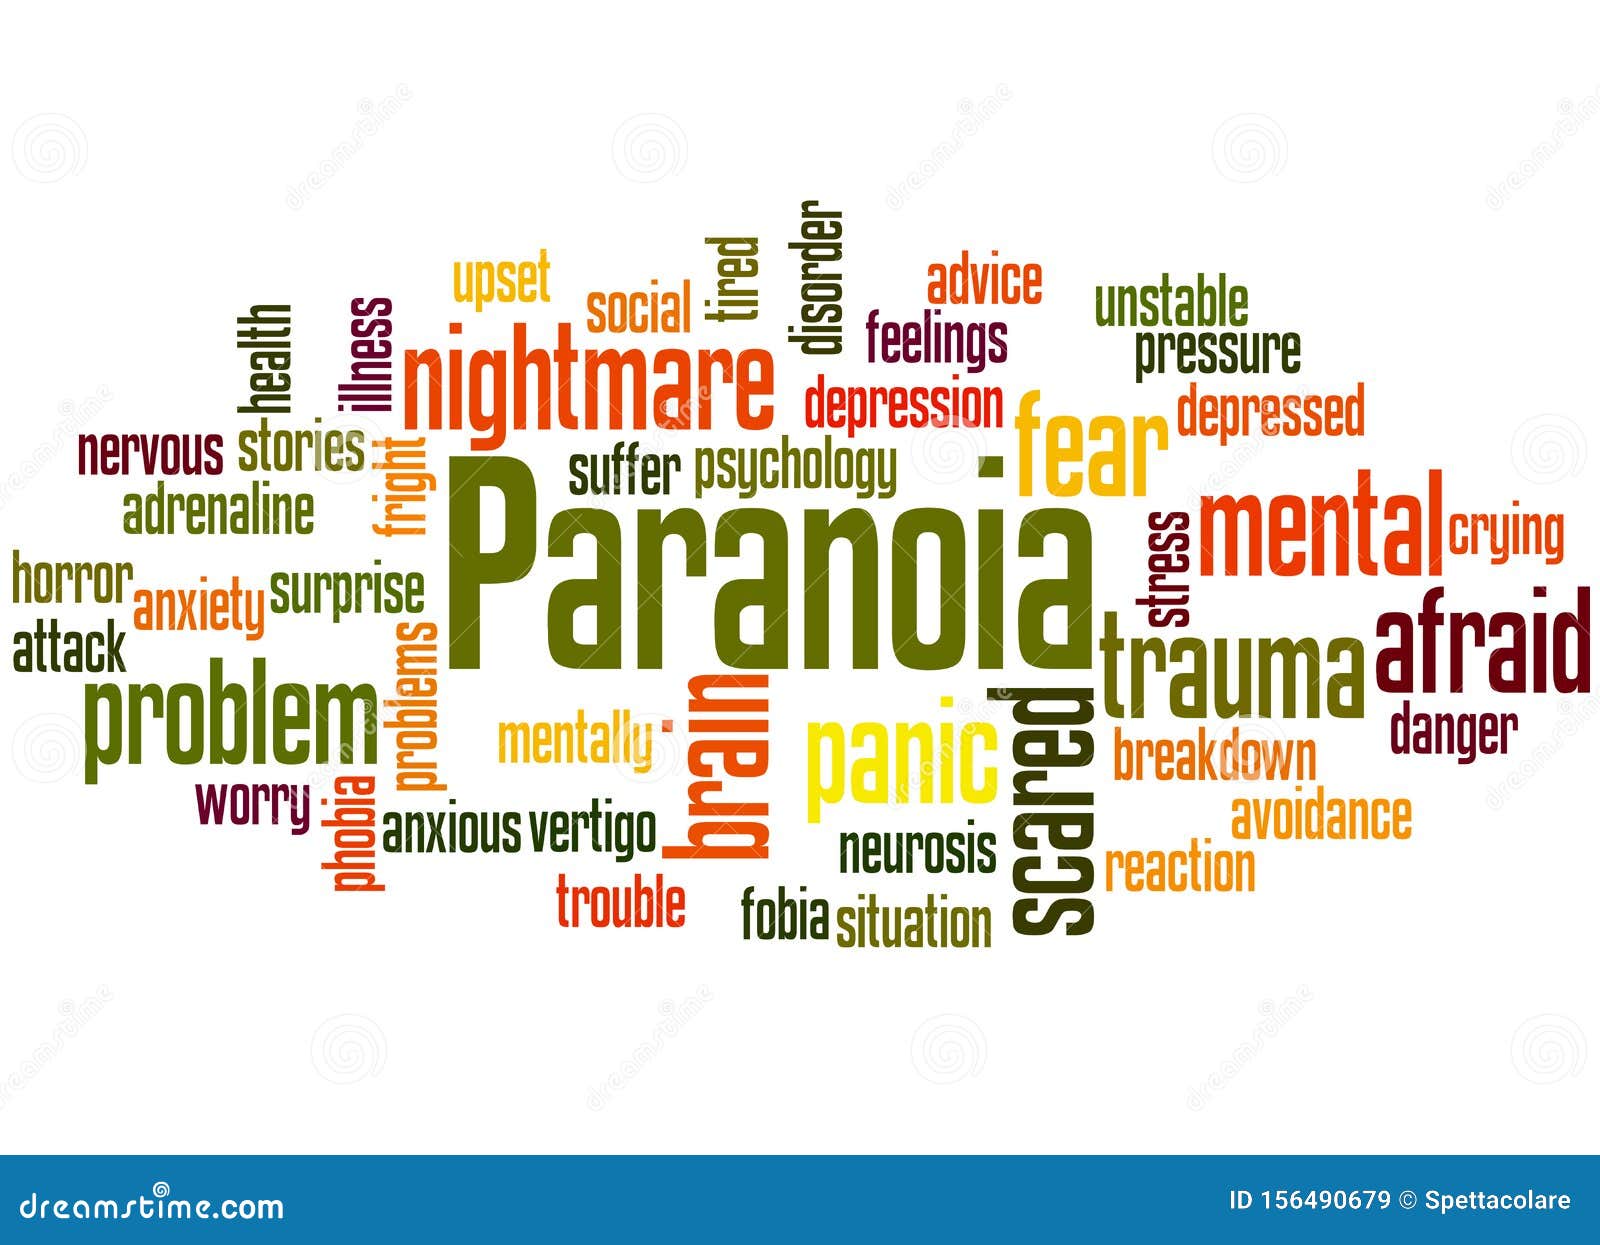 paranoia word cloud concept 2